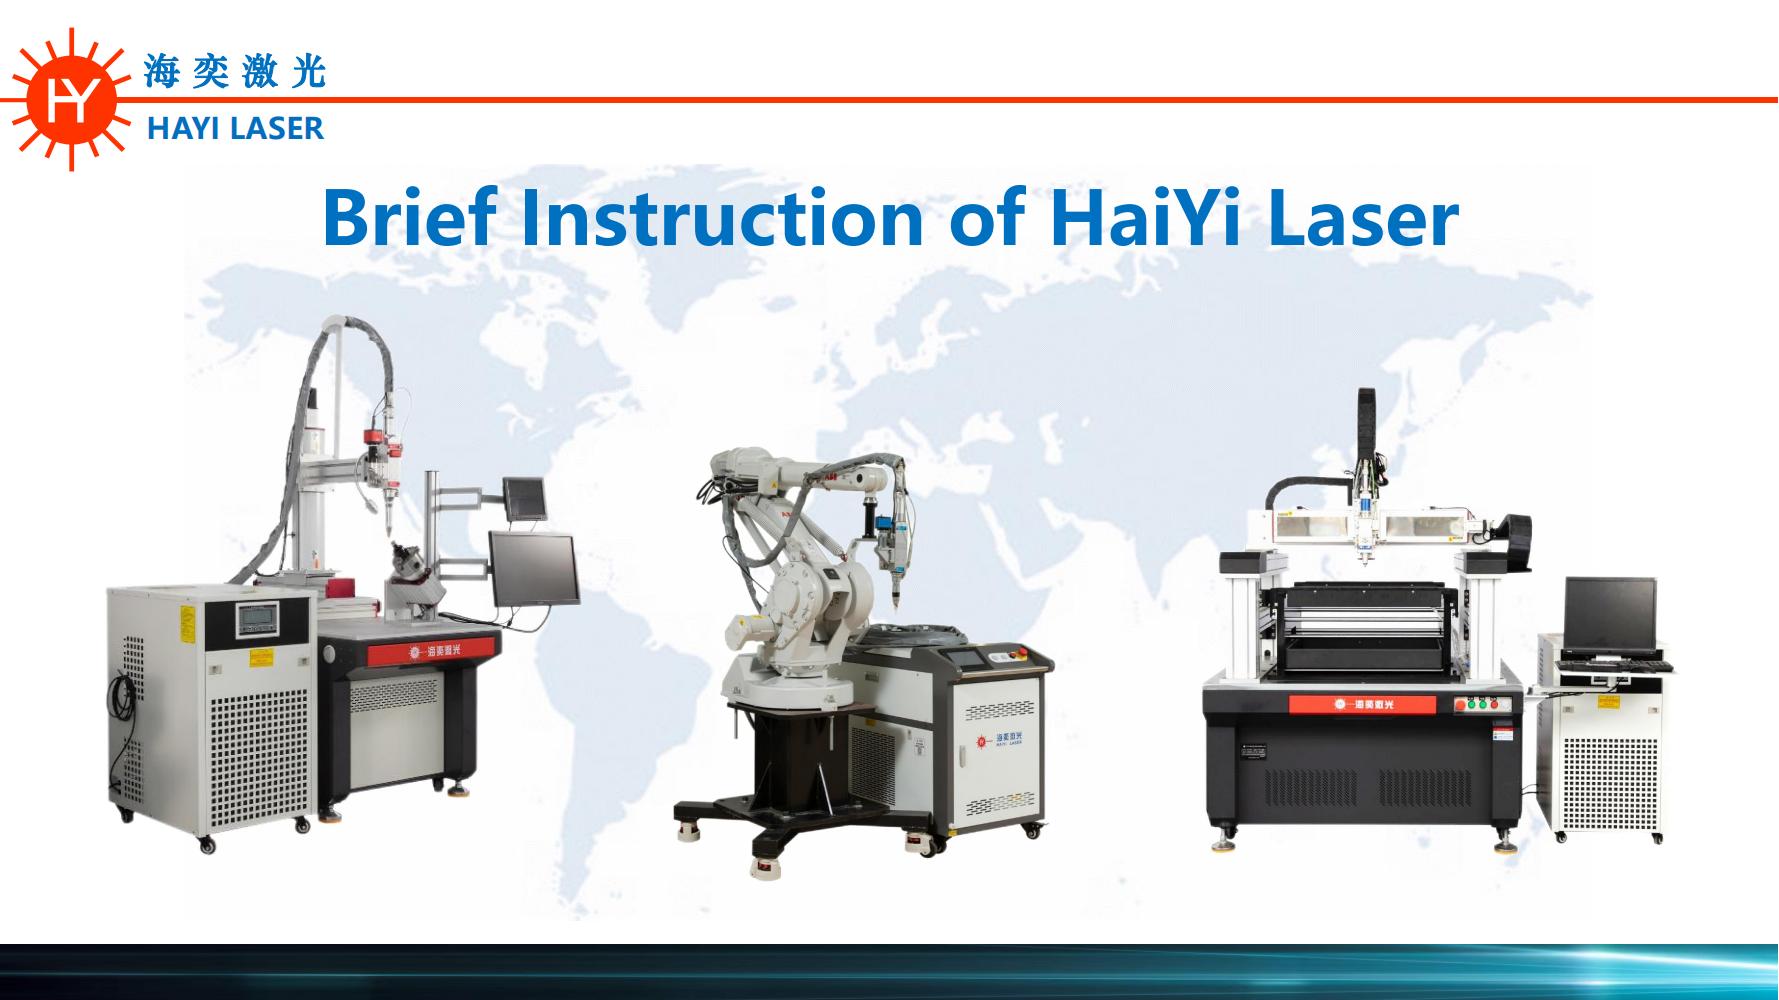 HaiYi Company Brief Introduction